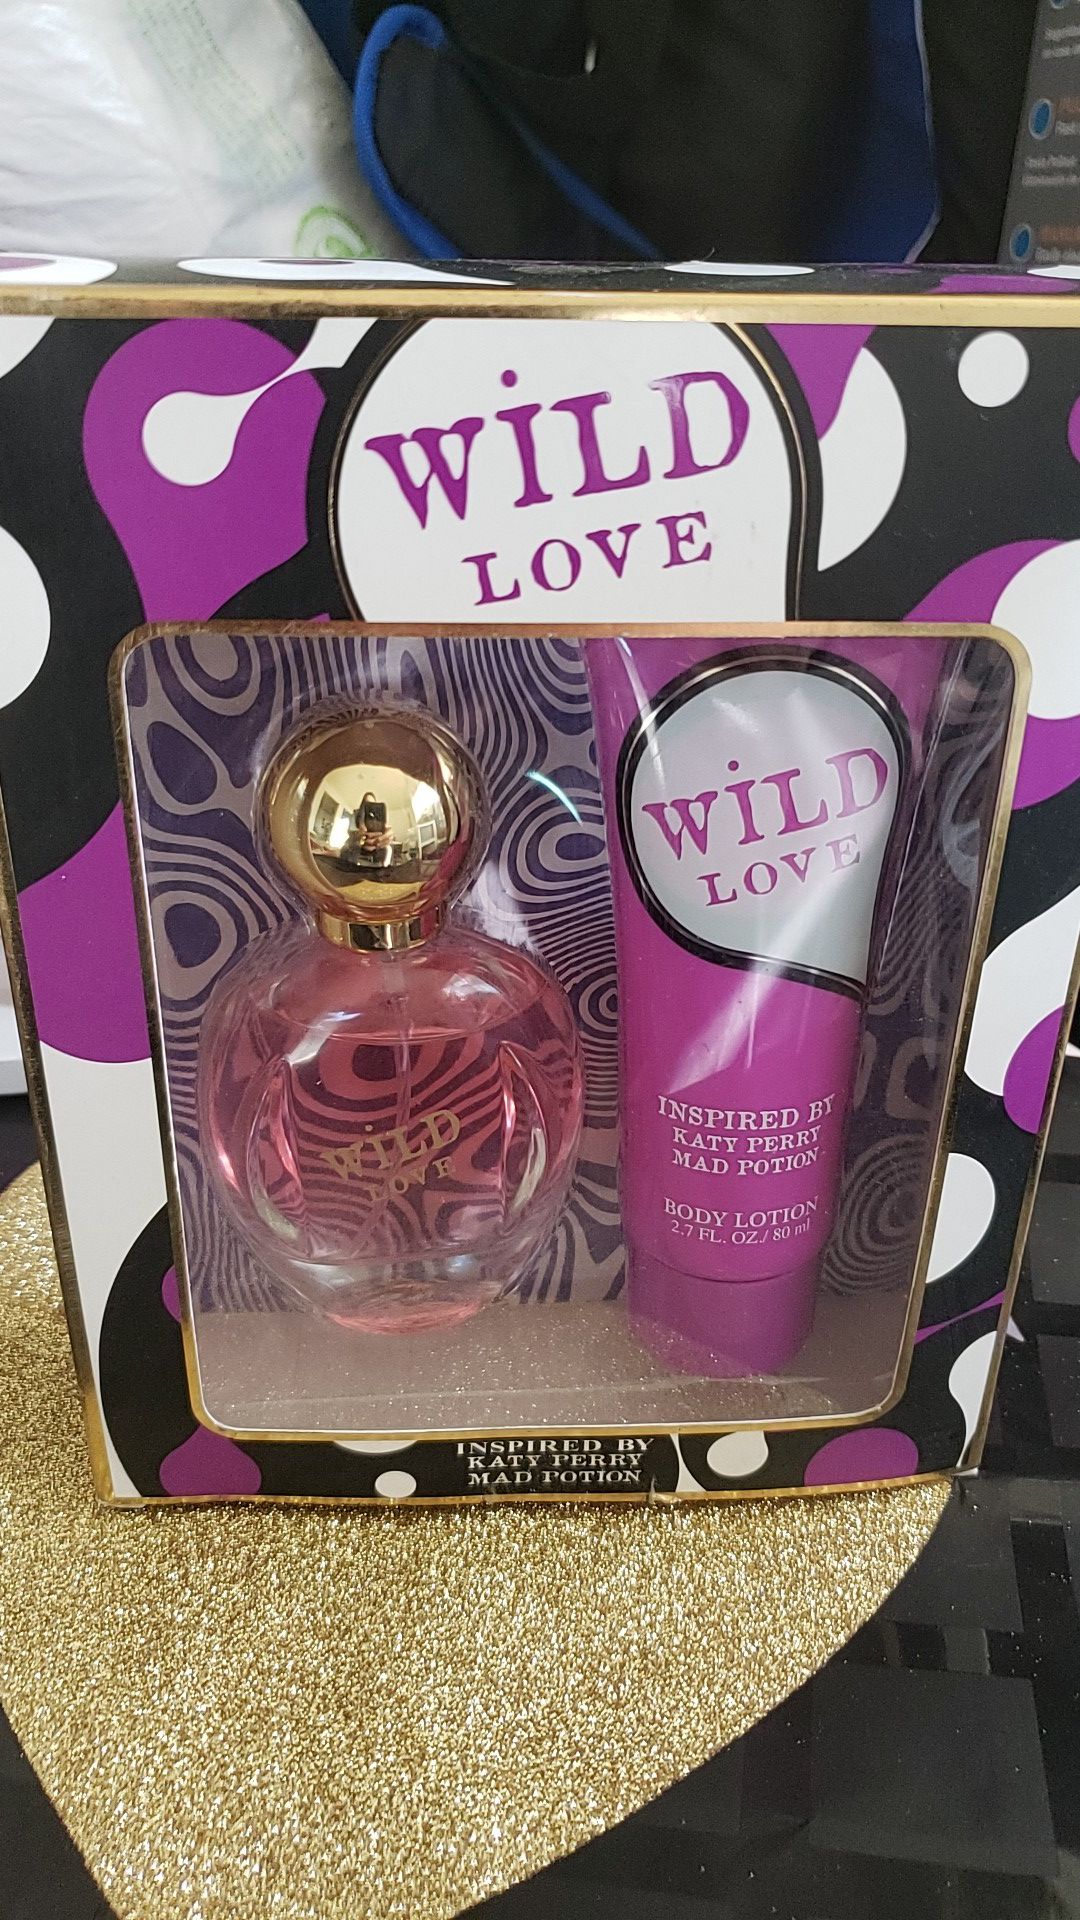 Wild love perfume